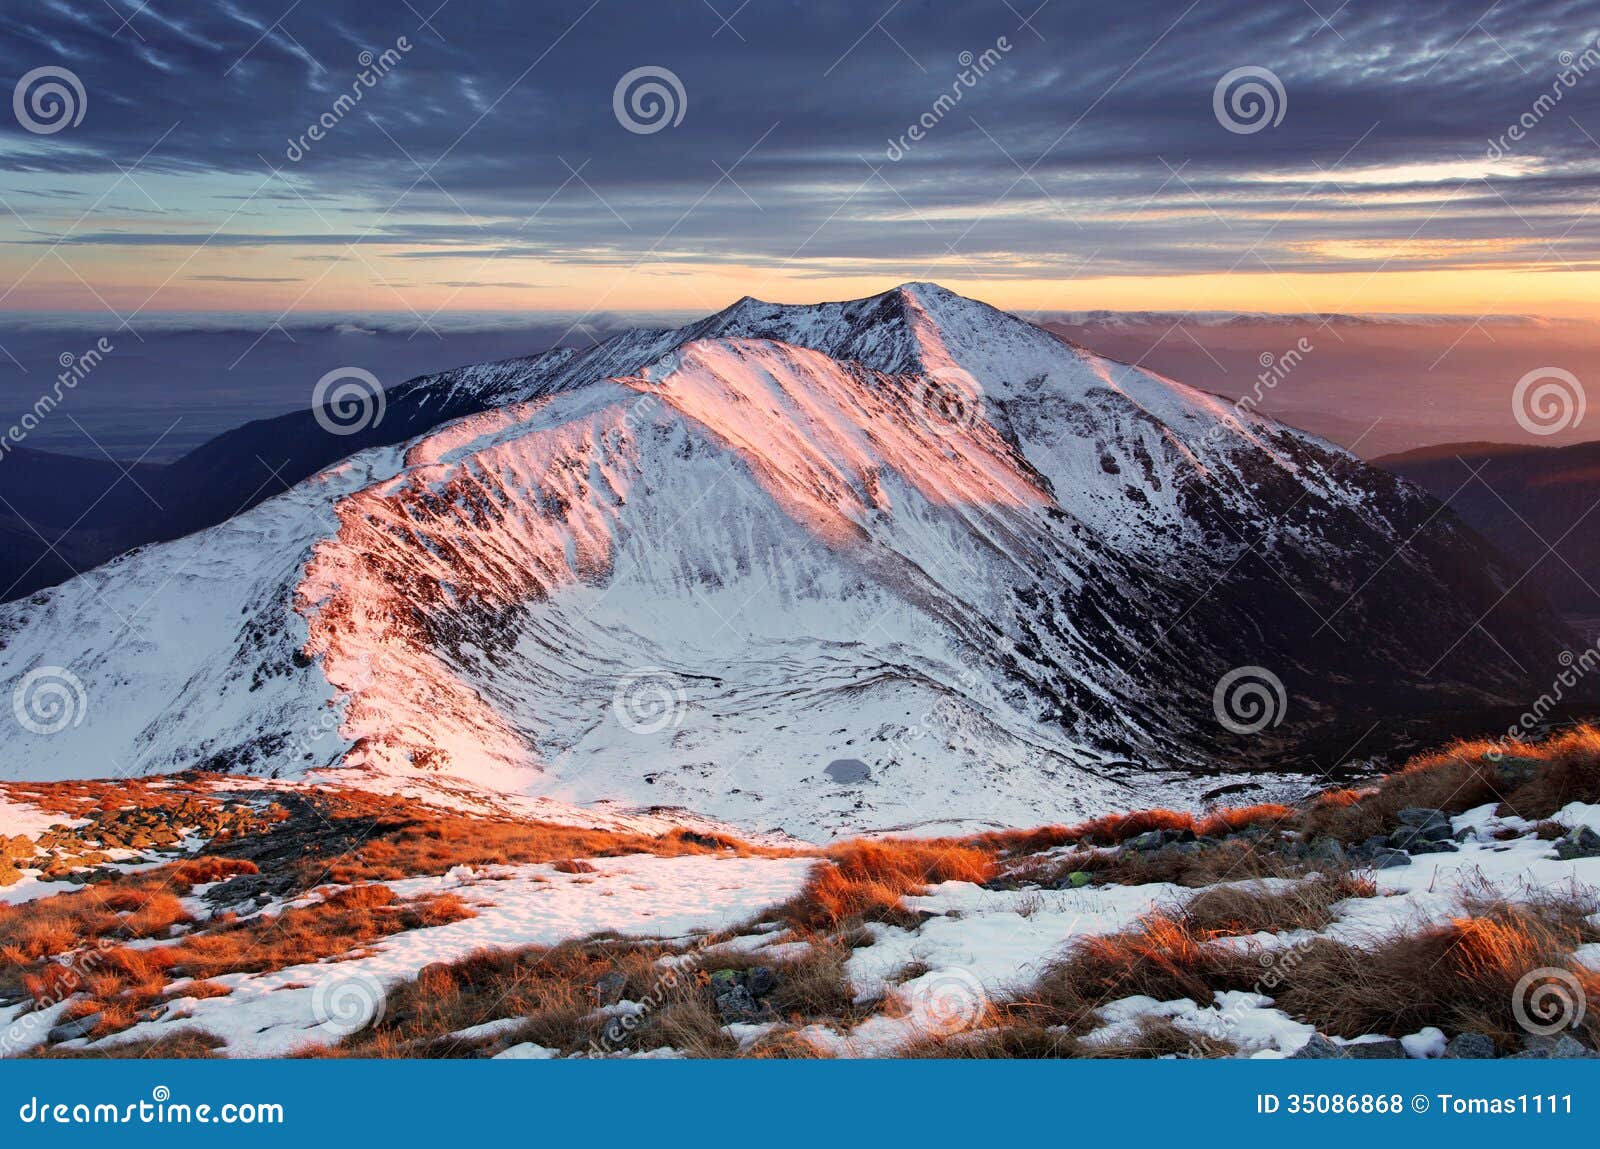 majestic sunset in winter mountains landscape - slovakia peak ba